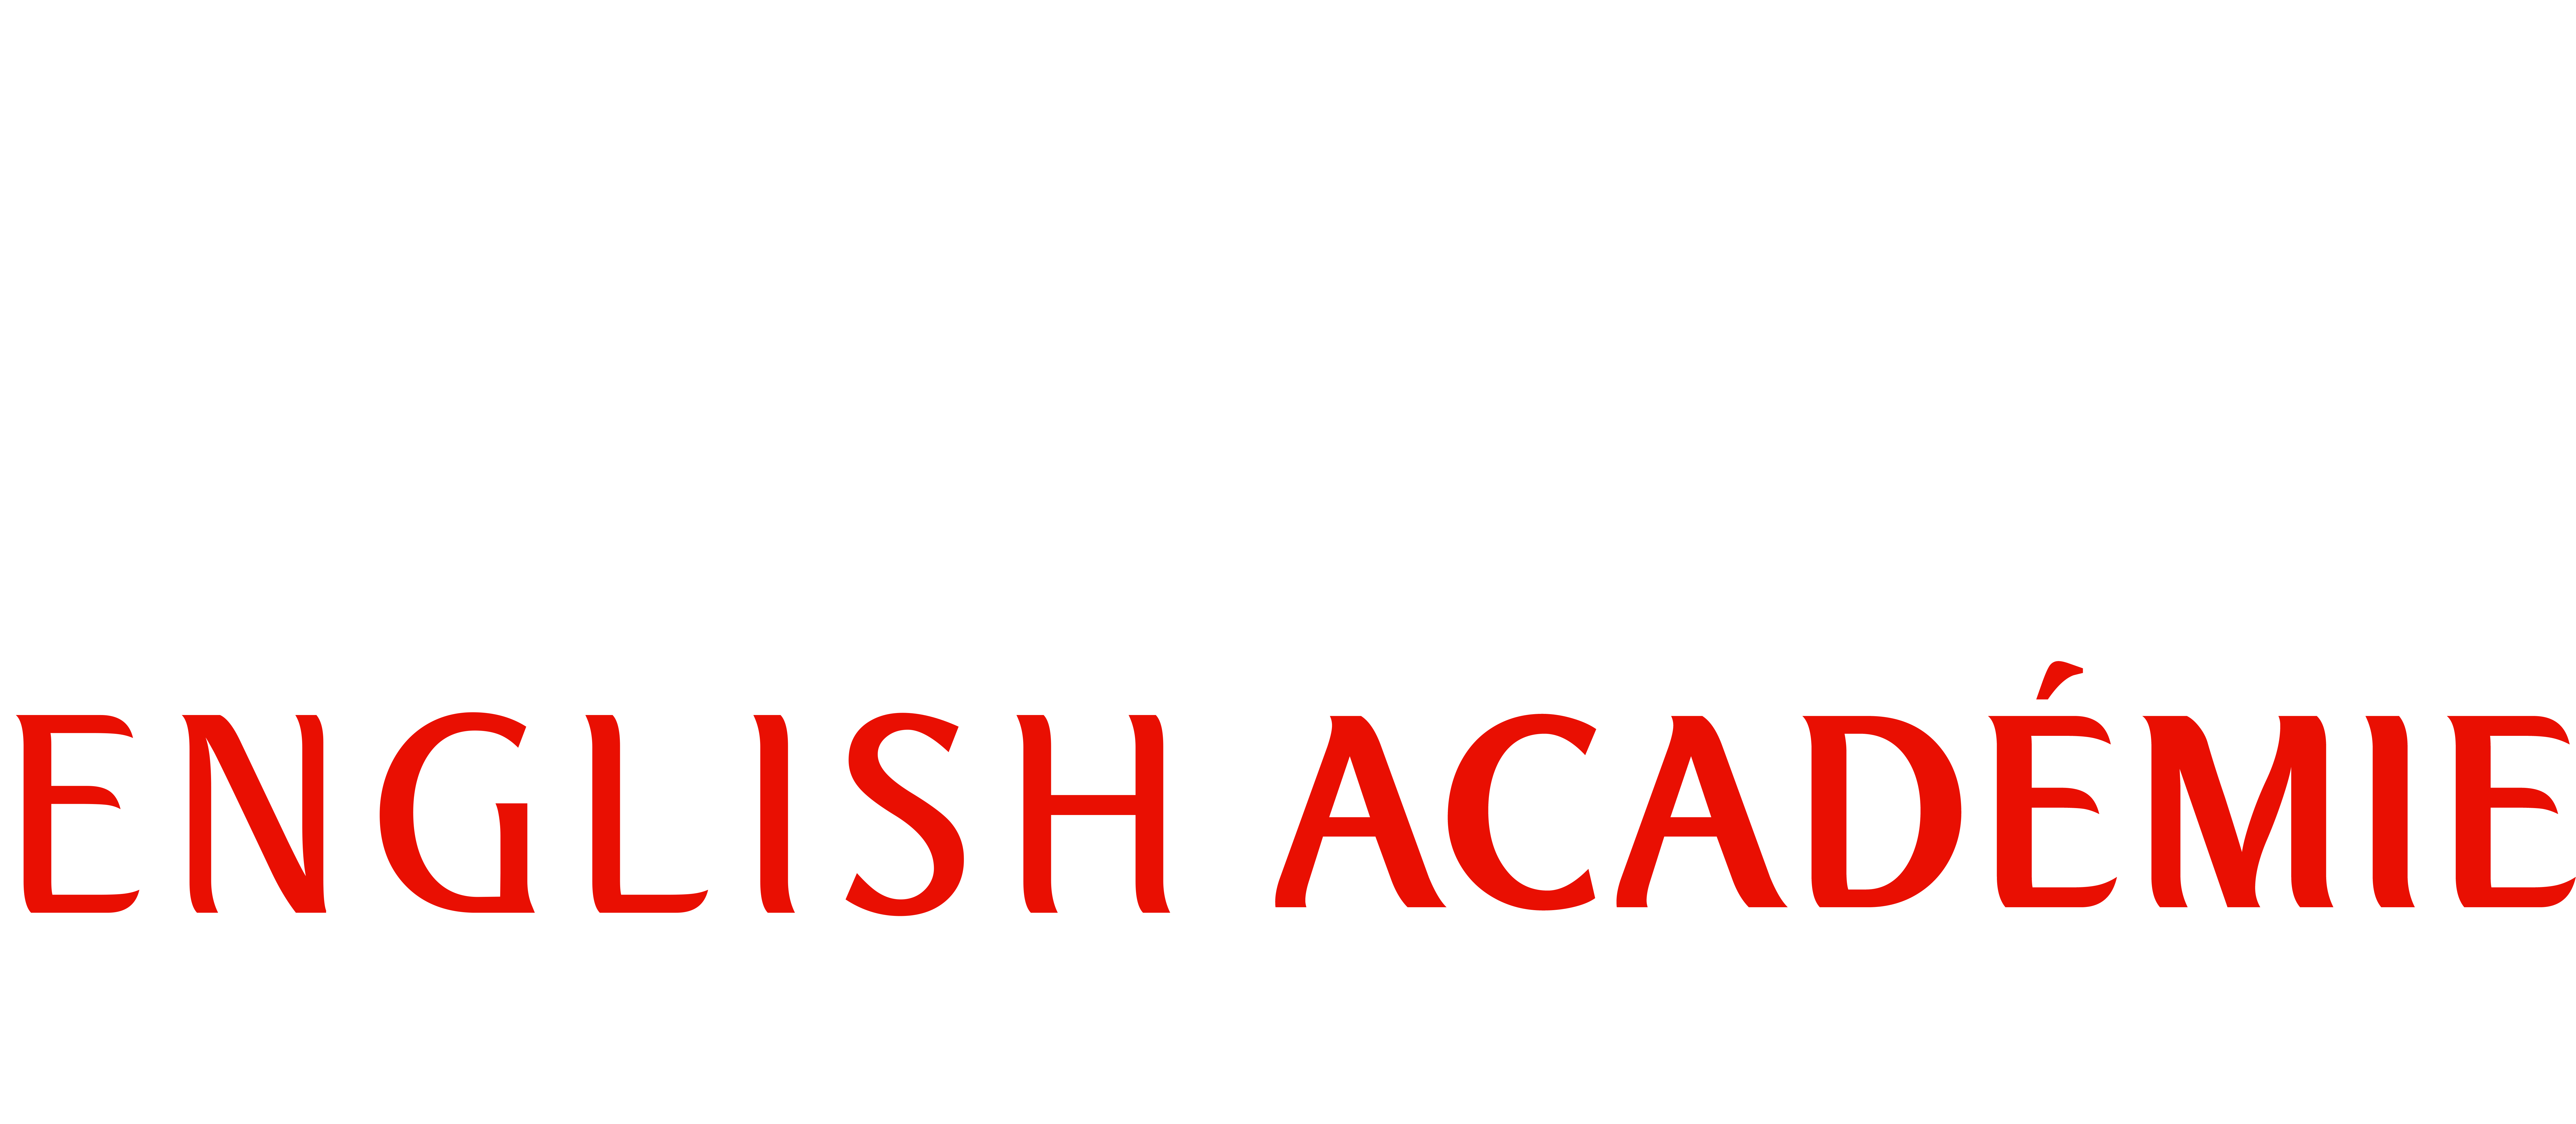 English Académie